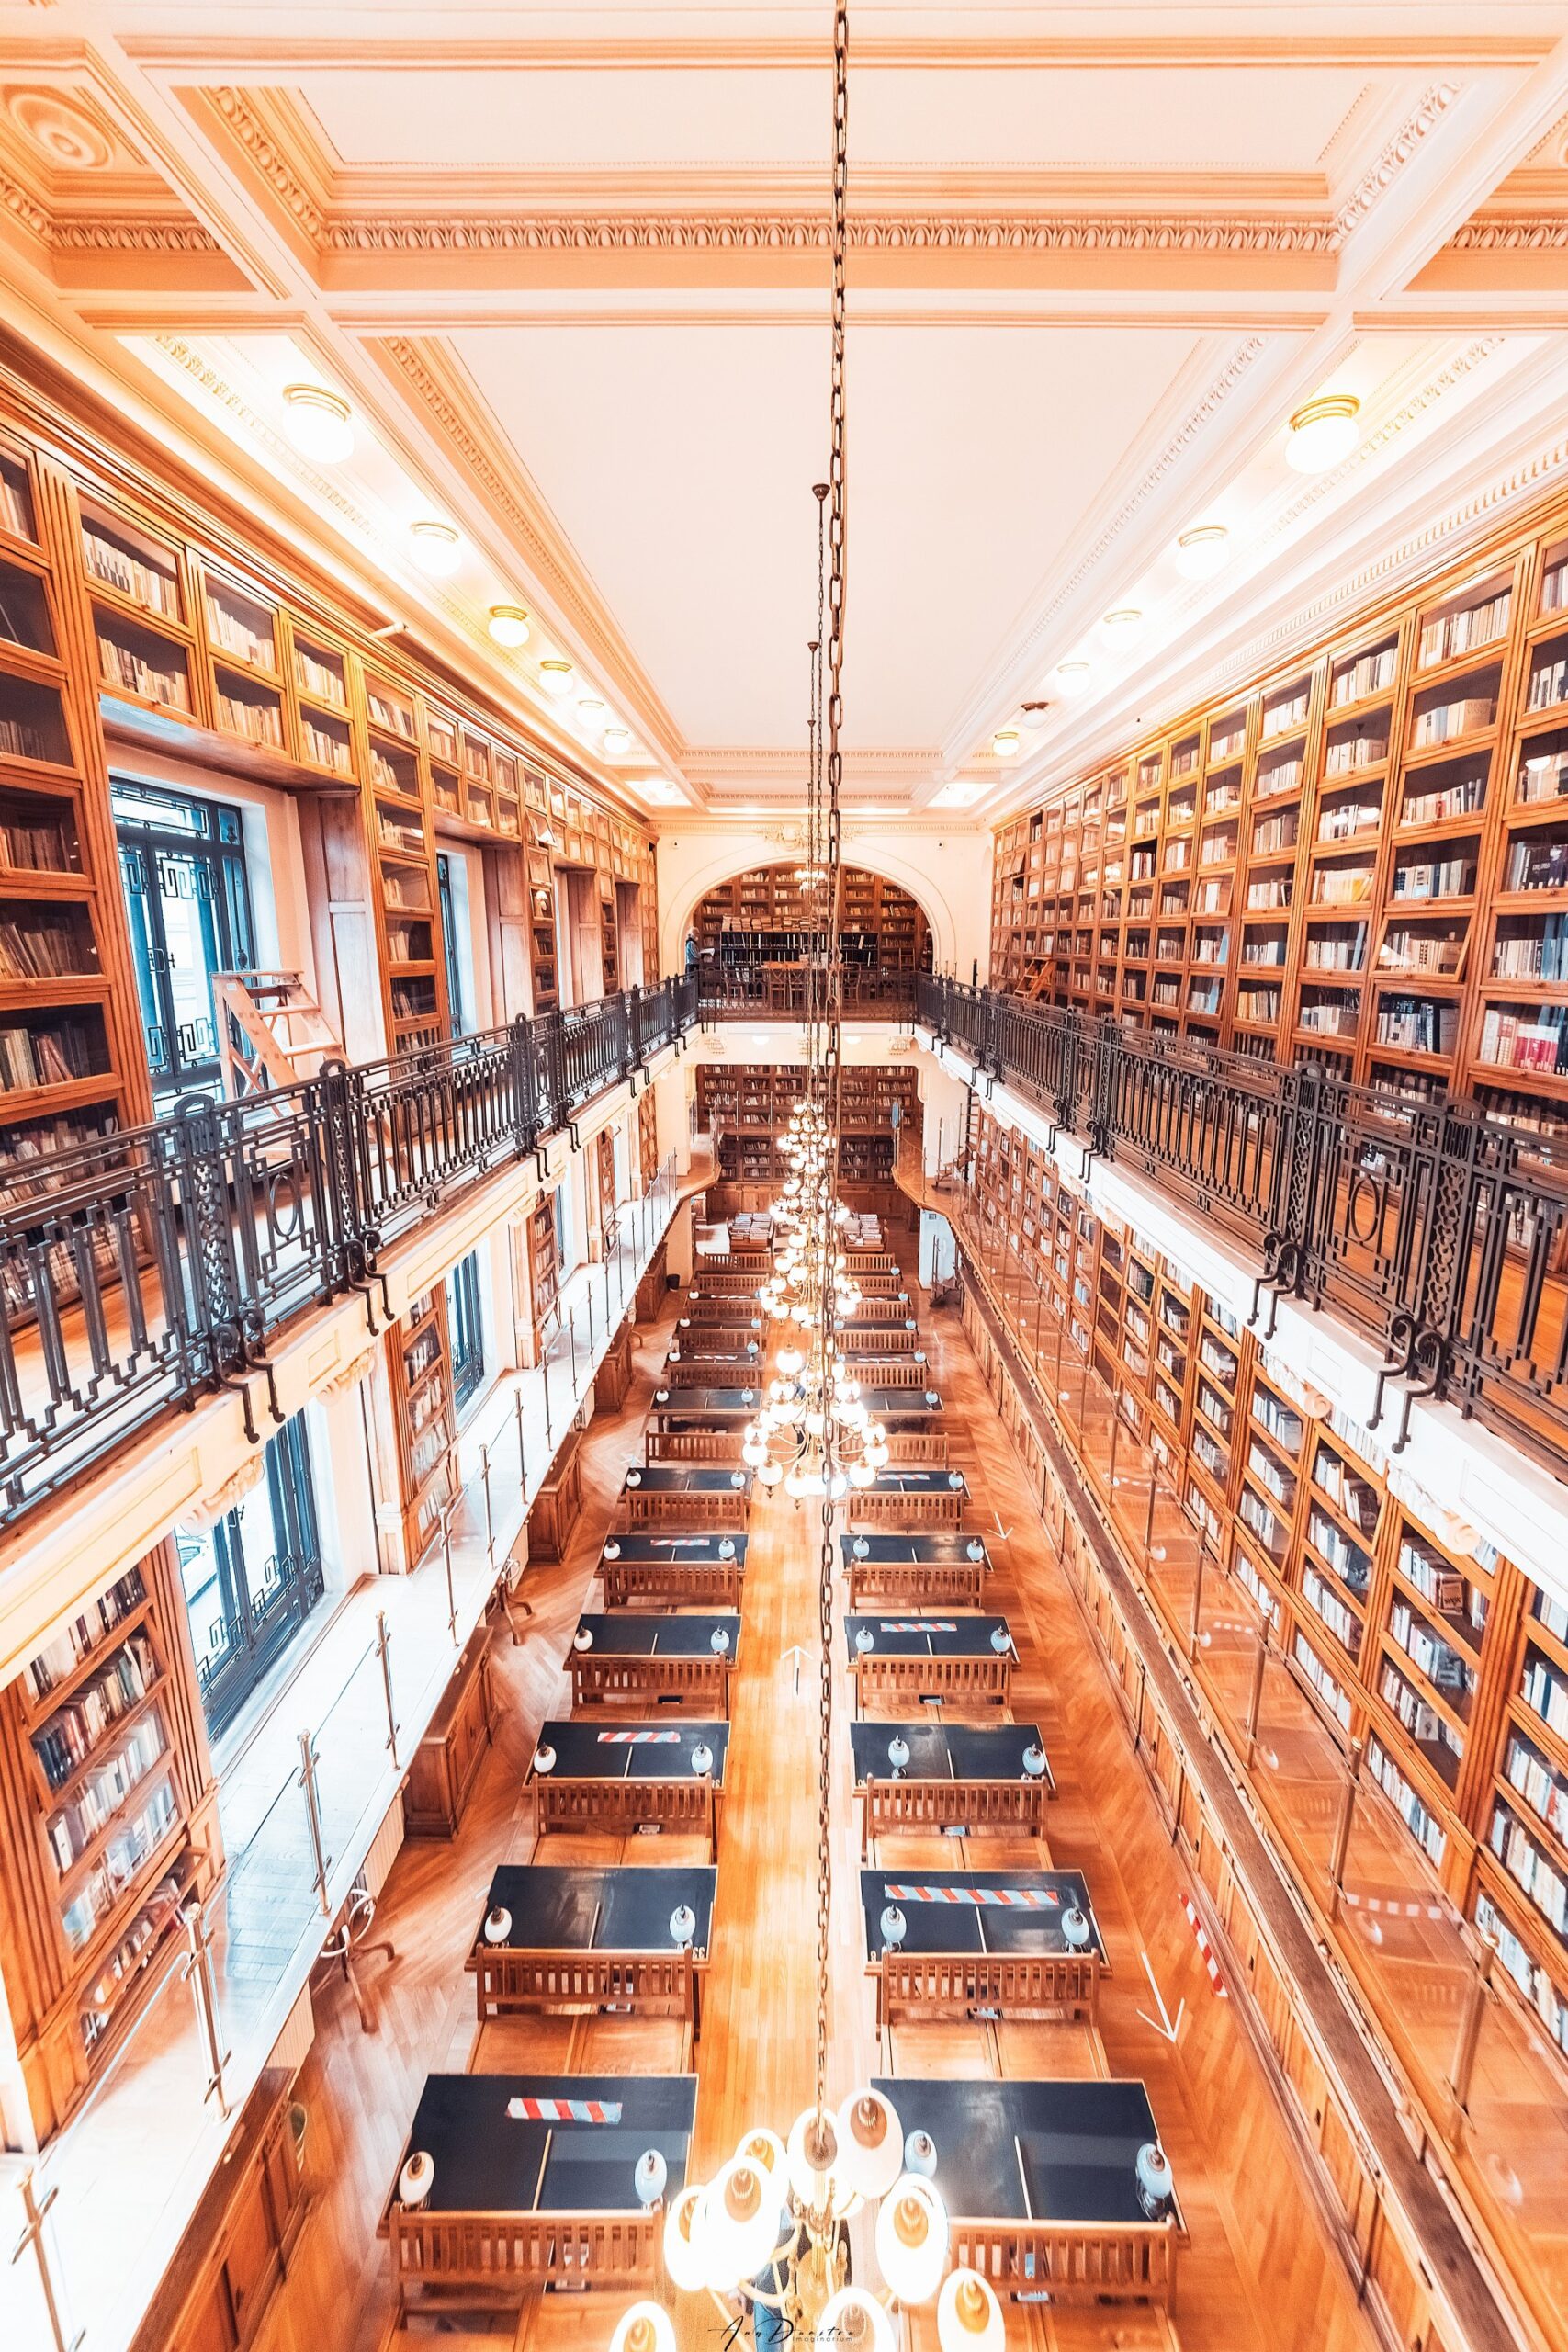 interiorul Bibliotecii Universitatii Bucuresti FOTO CREDIT Ana Dumitru